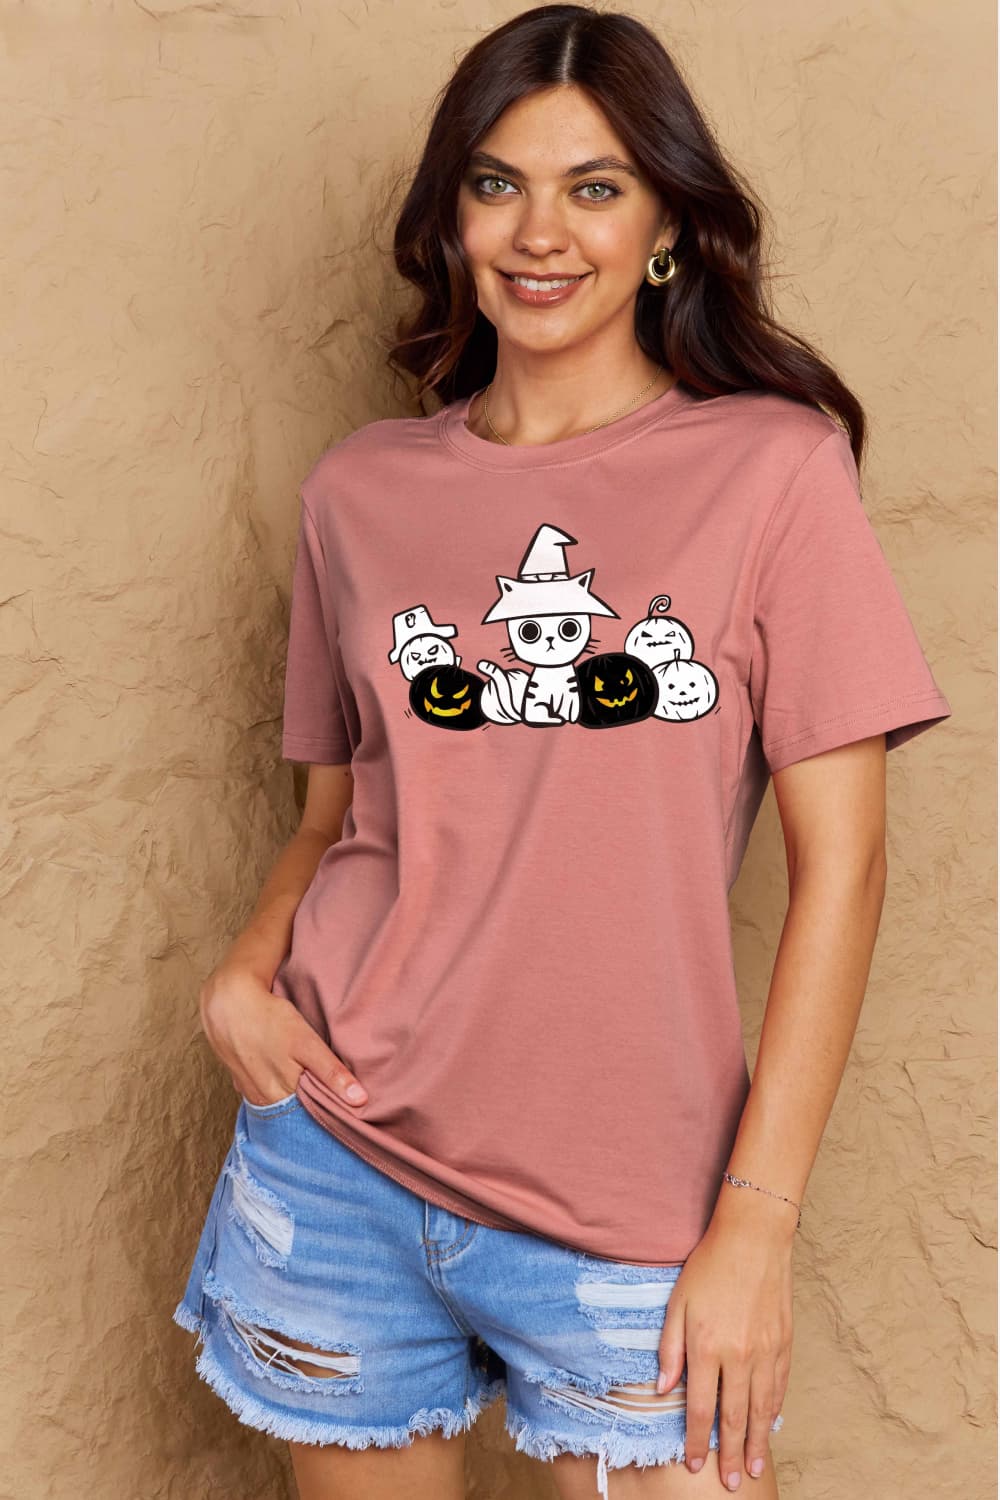 Full Size Cat & Pumpkin Graphic Cotton T-Shirt - Pink / S - T-Shirts - Shirts & Tops - 1 - 2024